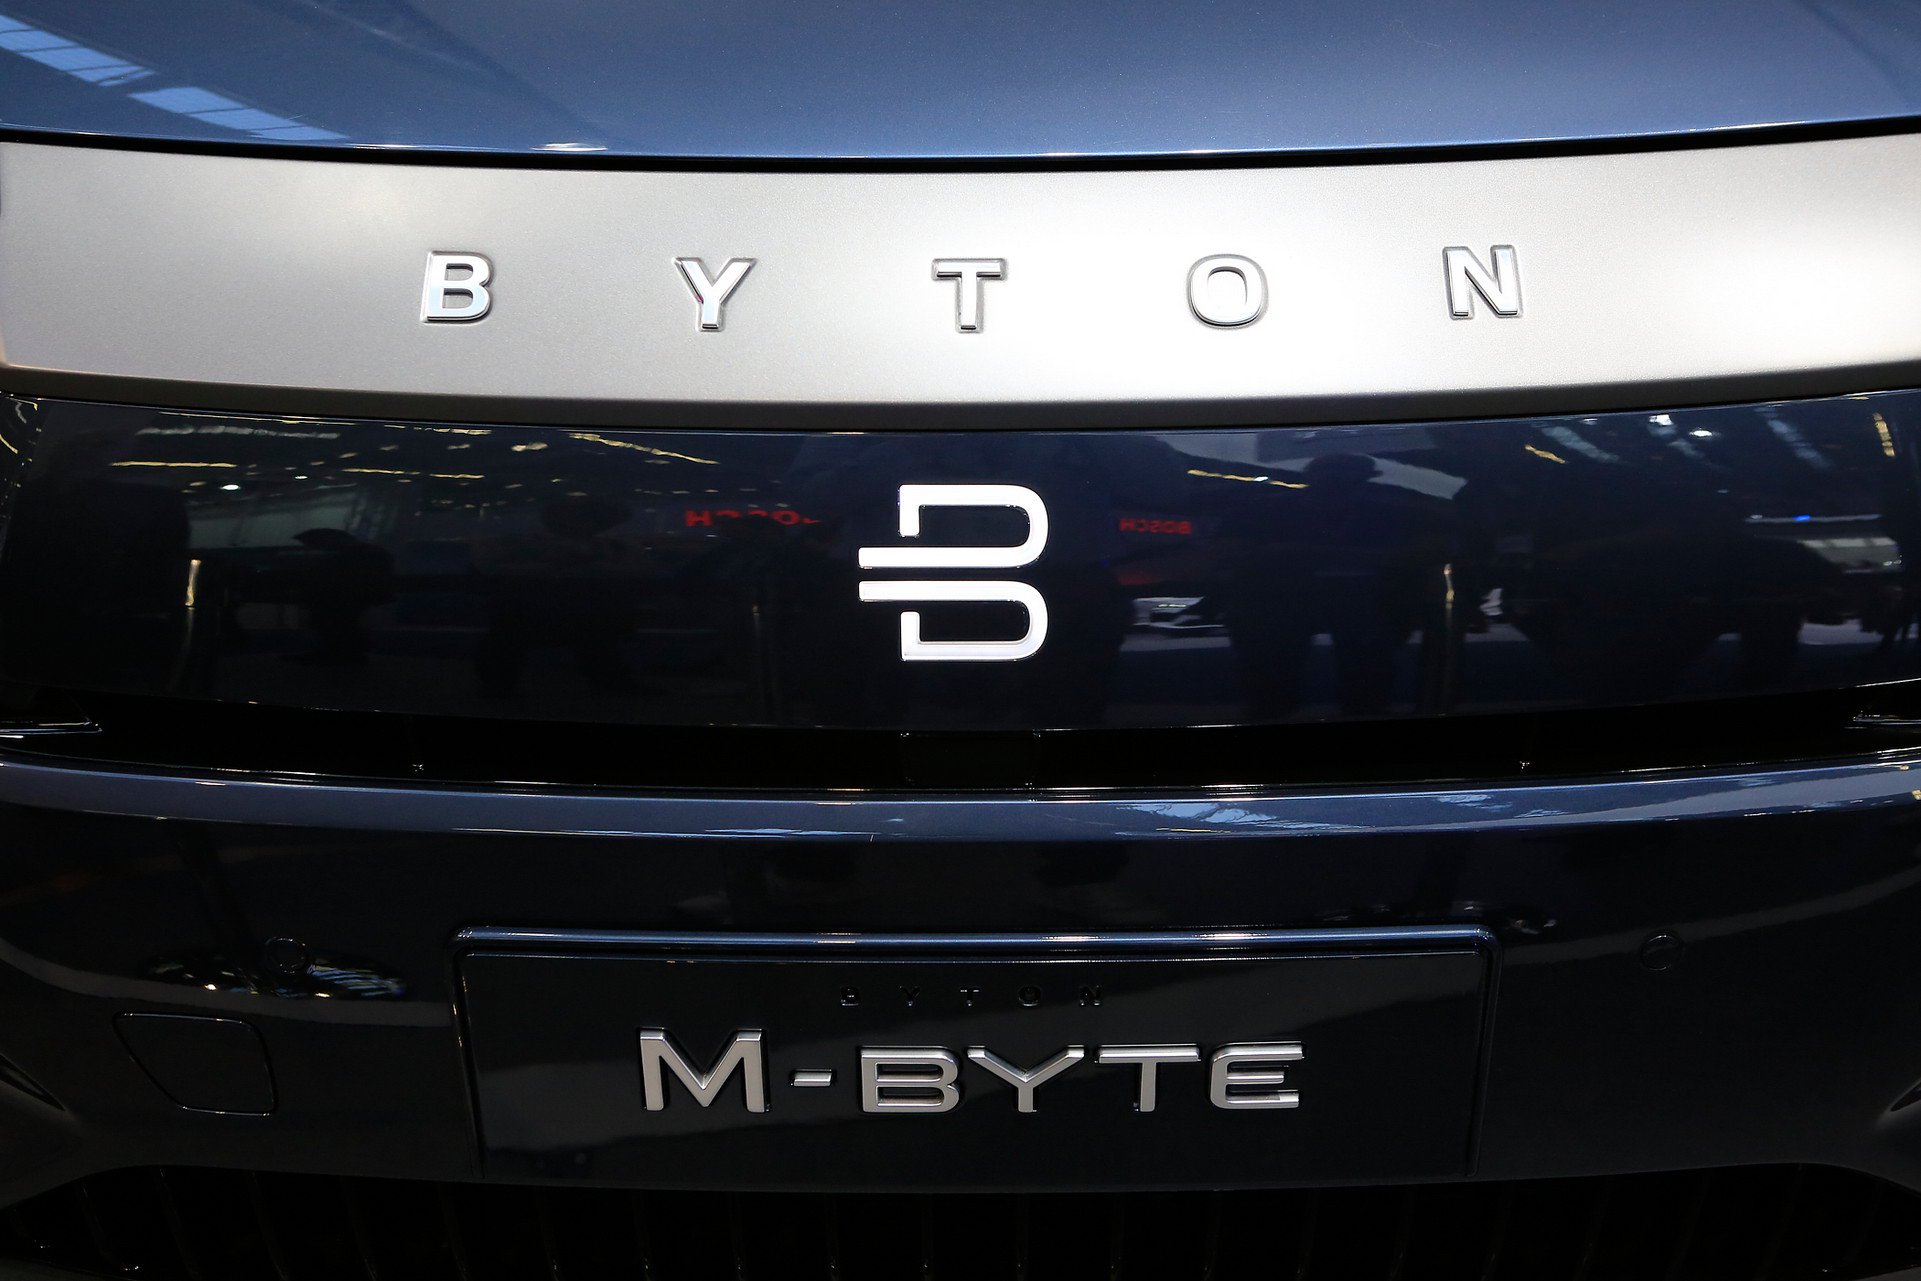 48 inç ekranlı Byton M-Byte elektrikli SUV, nihai tasarımıyla Frankfurt'ta